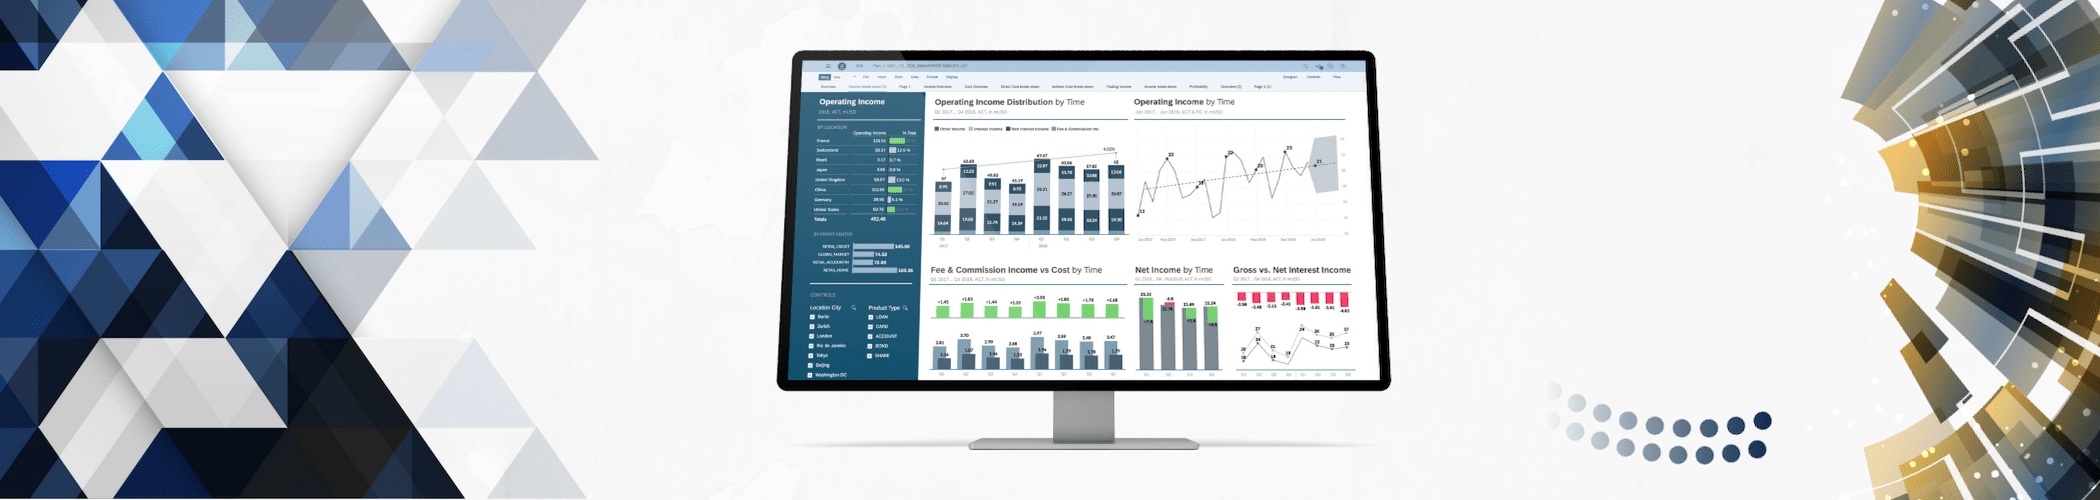 SAP Analytics Cloud | Navigator Business Solutions